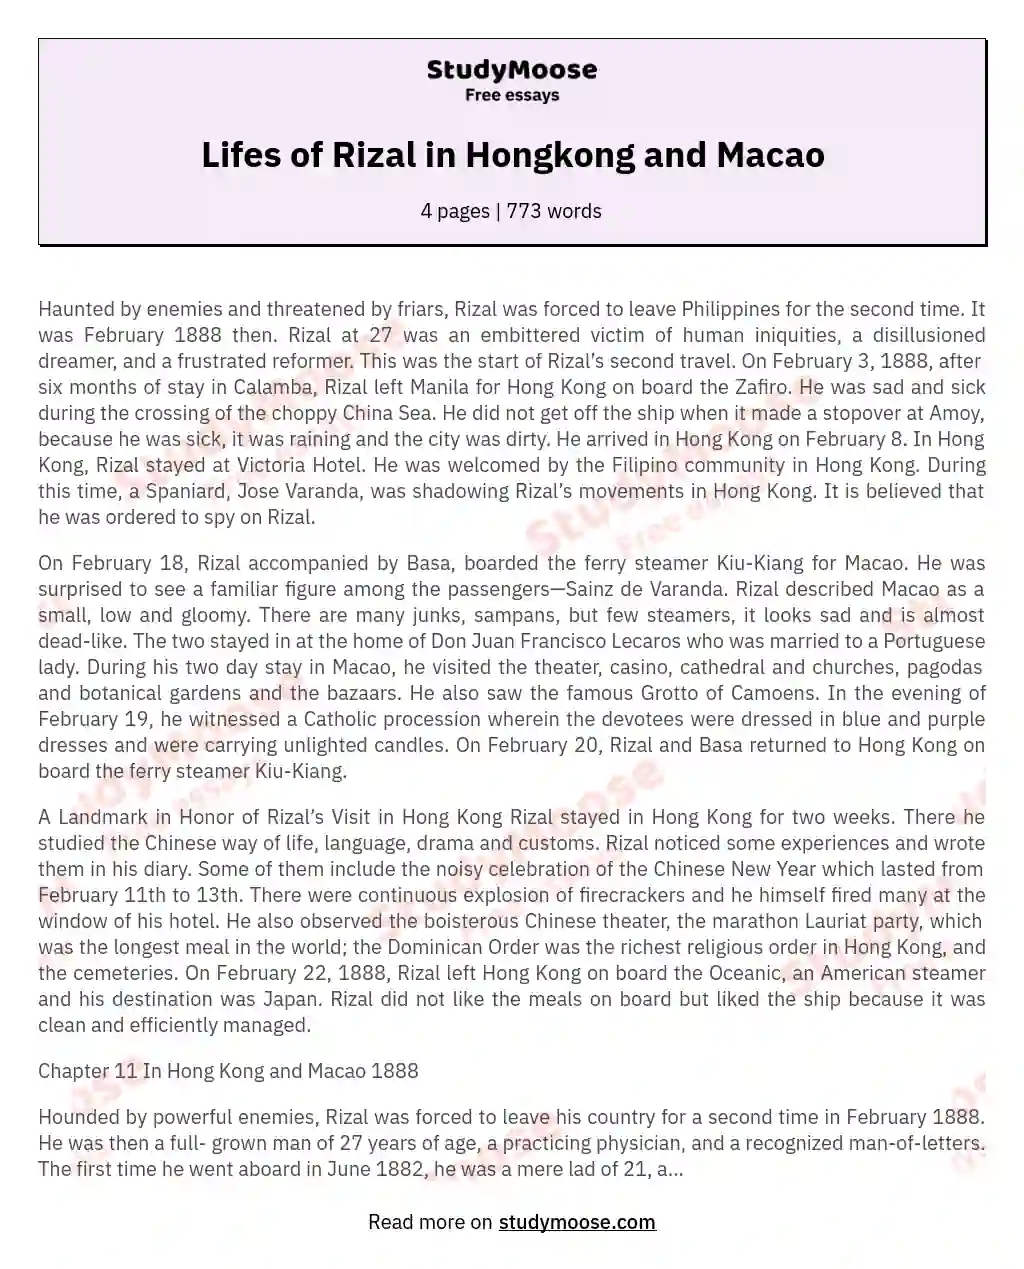 Lifes of Rizal in Hongkong and Macao essay